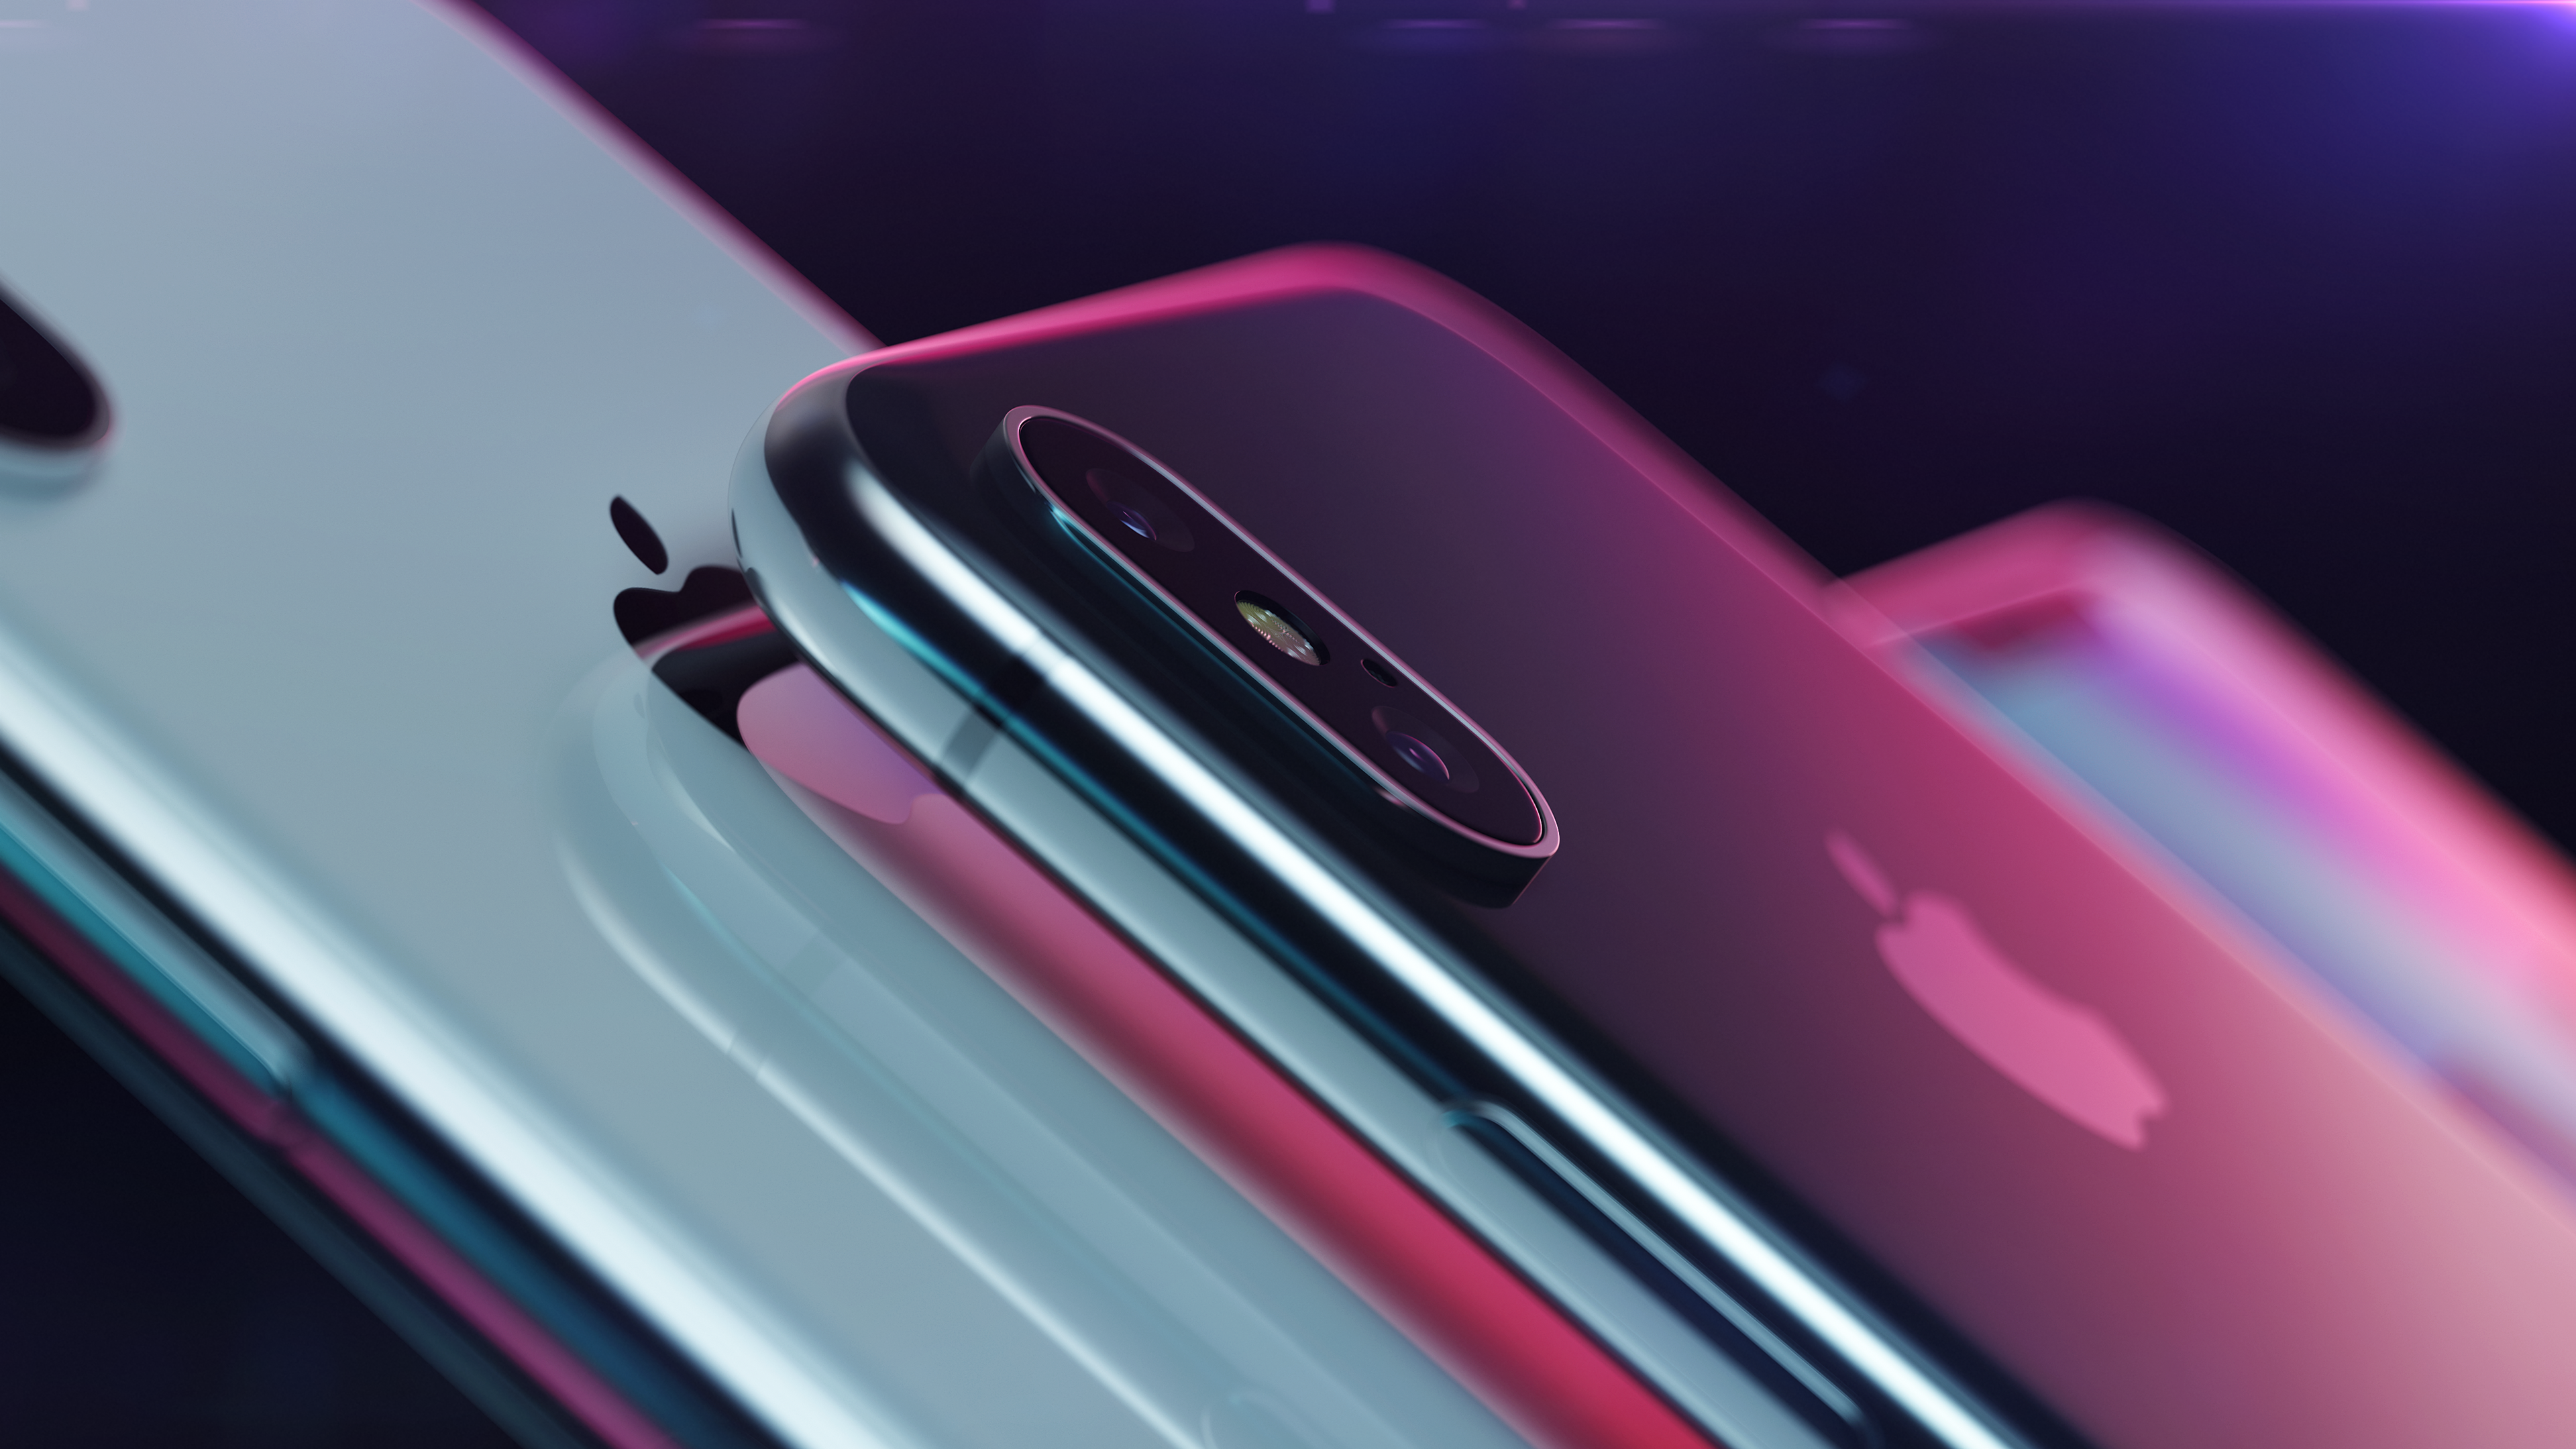 iphone 10 fondo de pantalla hd,rosado,púrpura,artilugio,tecnología,teléfono inteligente